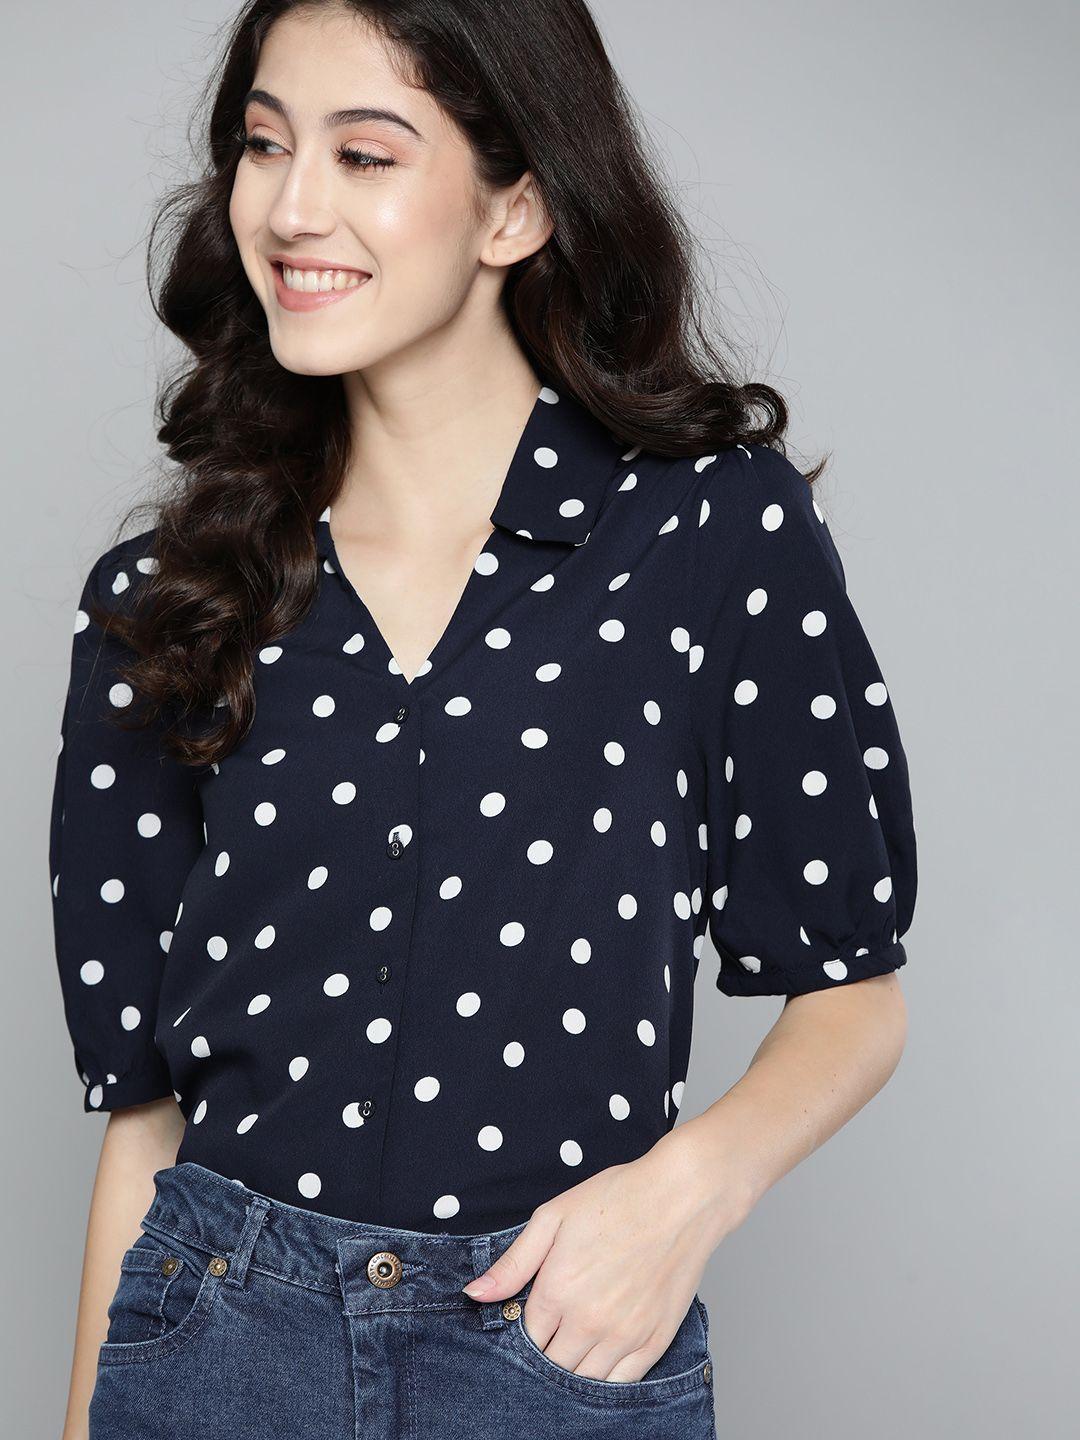 mast & harbour women navy blue & white polka dots print shirt style top